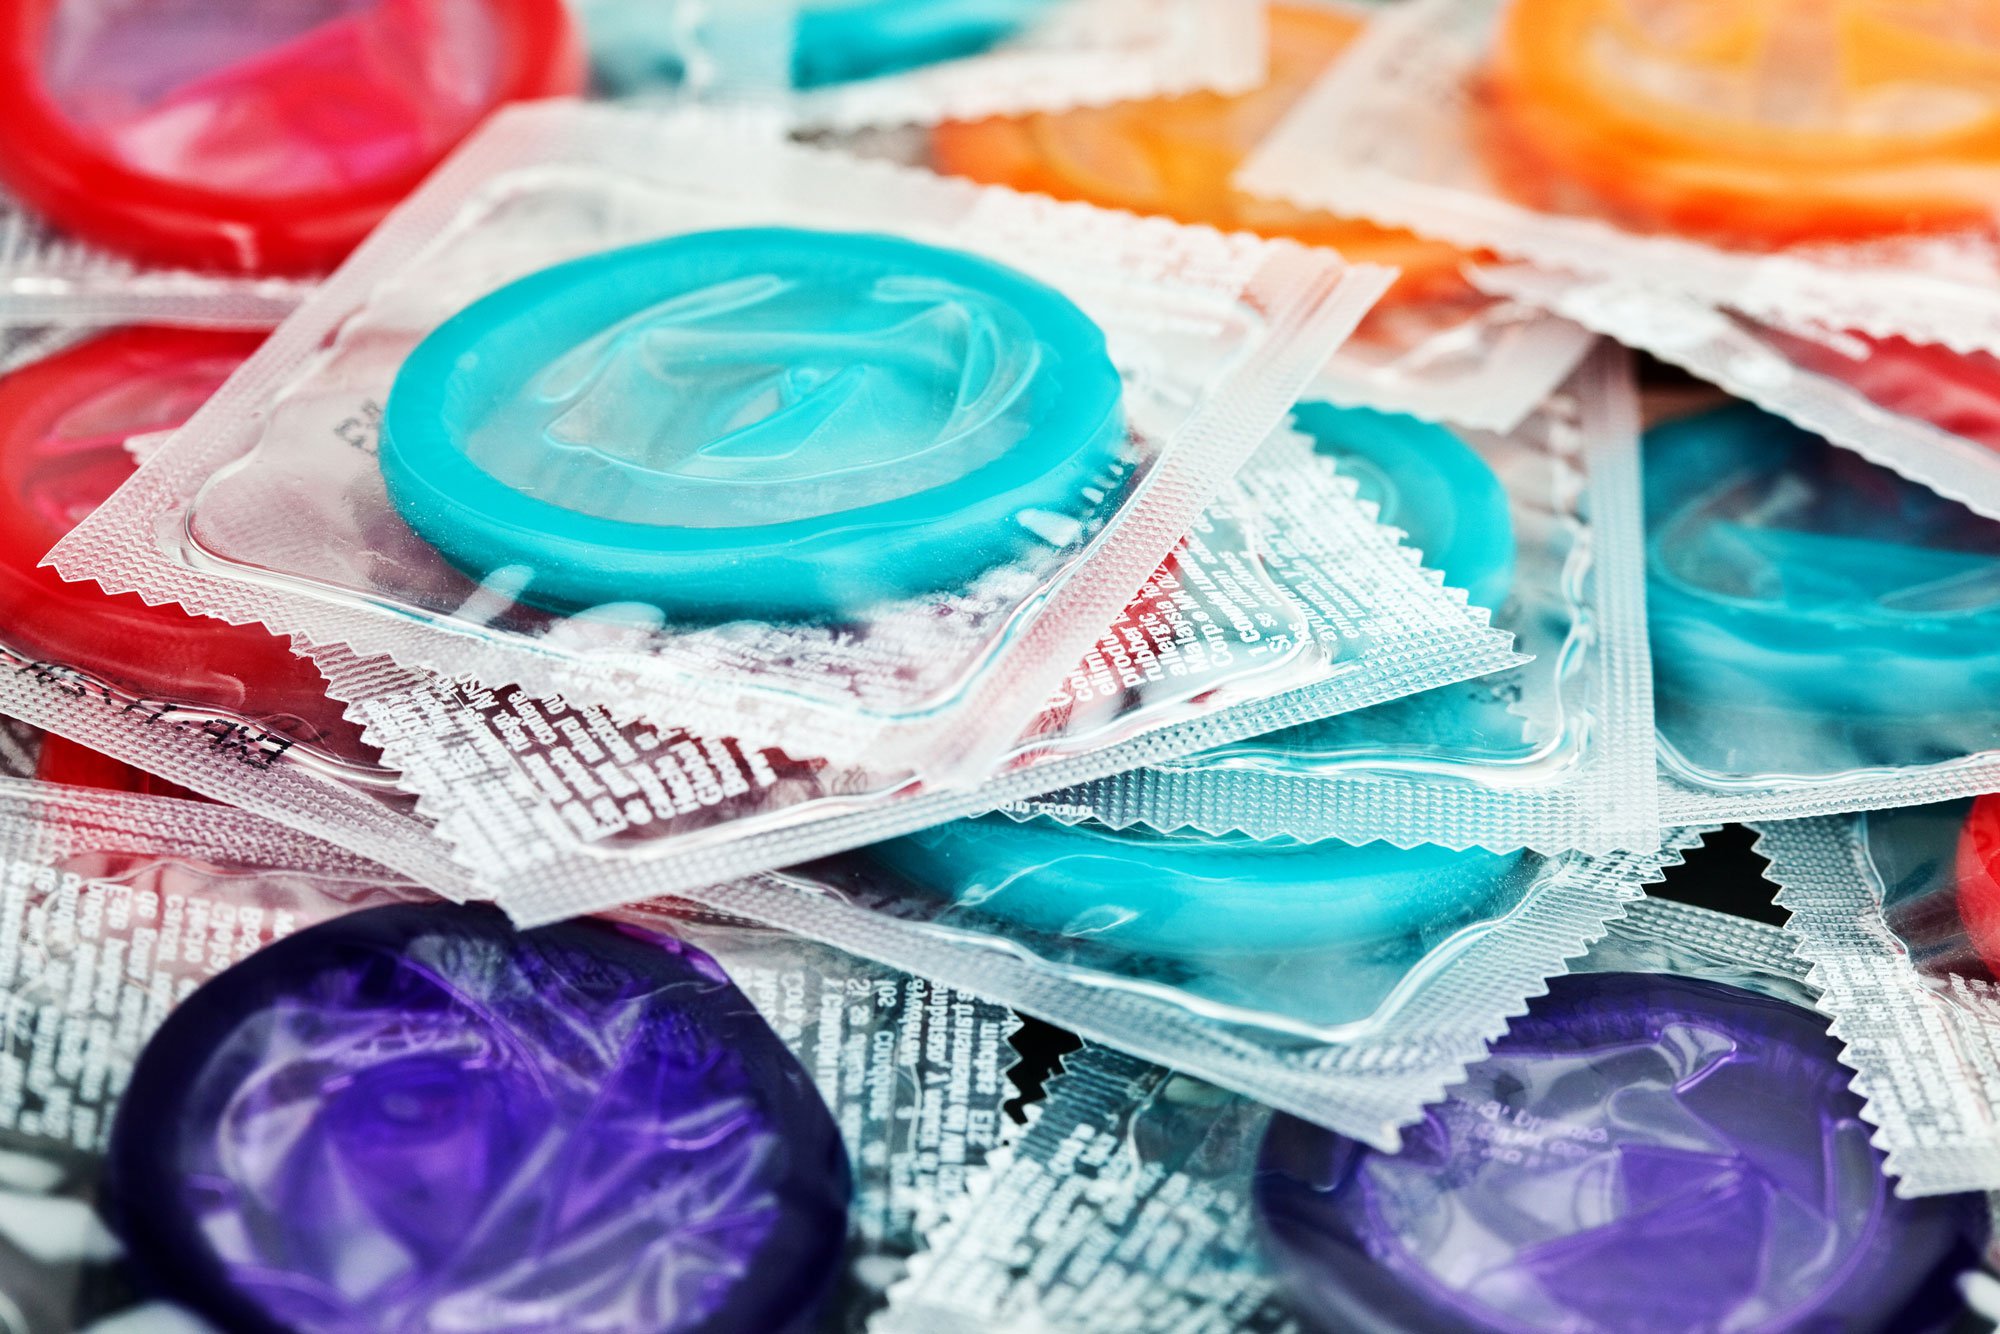 Our Condoms - Advantages And Disadvantages - News Medical PDFs